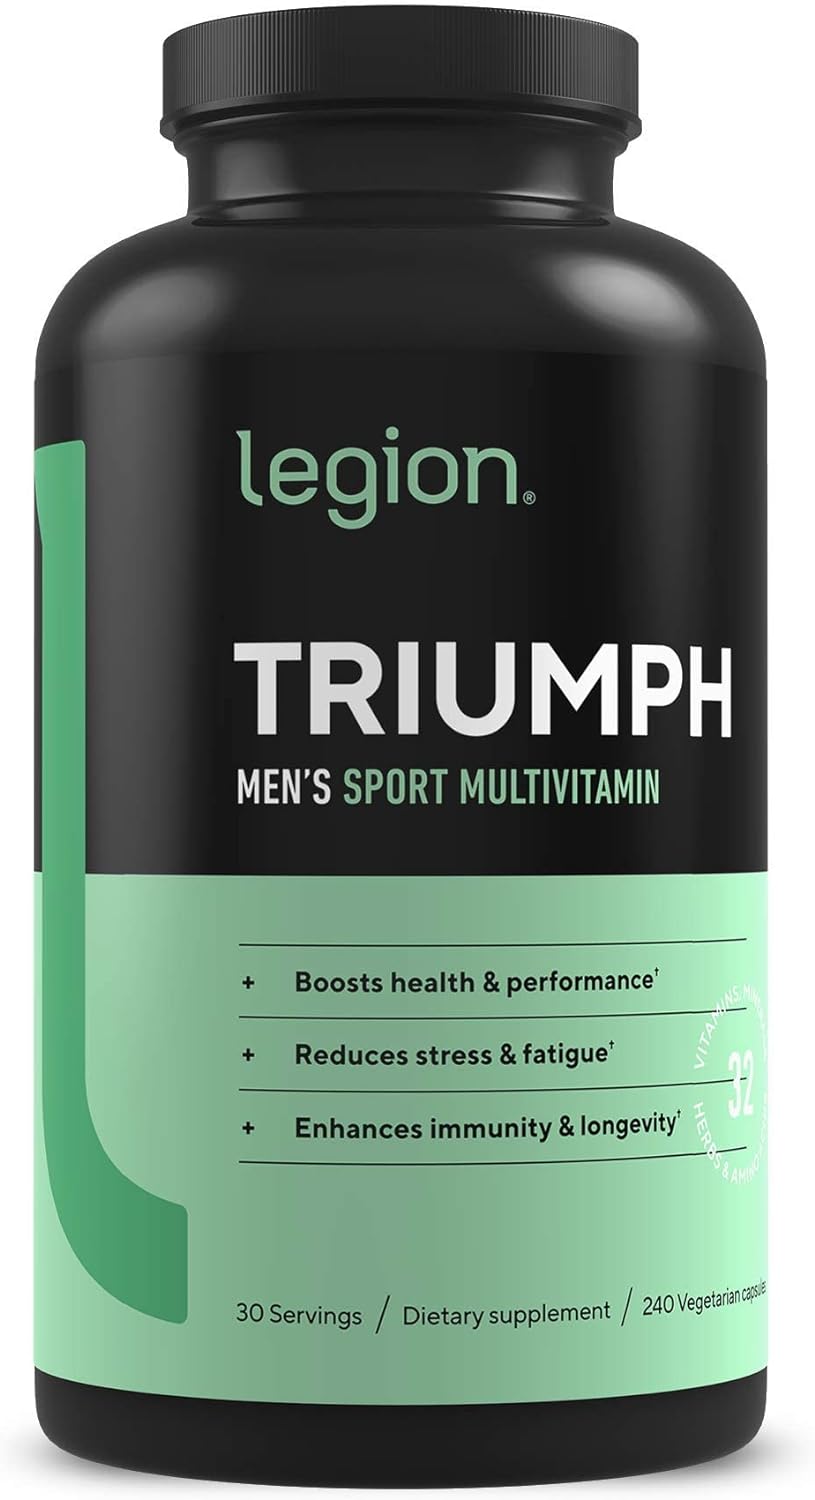 LEGION Triumph Men's Sport Vitamin - Complete Multivitamin for Men - Daily Vitamins for Men to Boost Health and Performance - Men's Multivitamin with 21 Vitamins & Minerals - 30 Servings